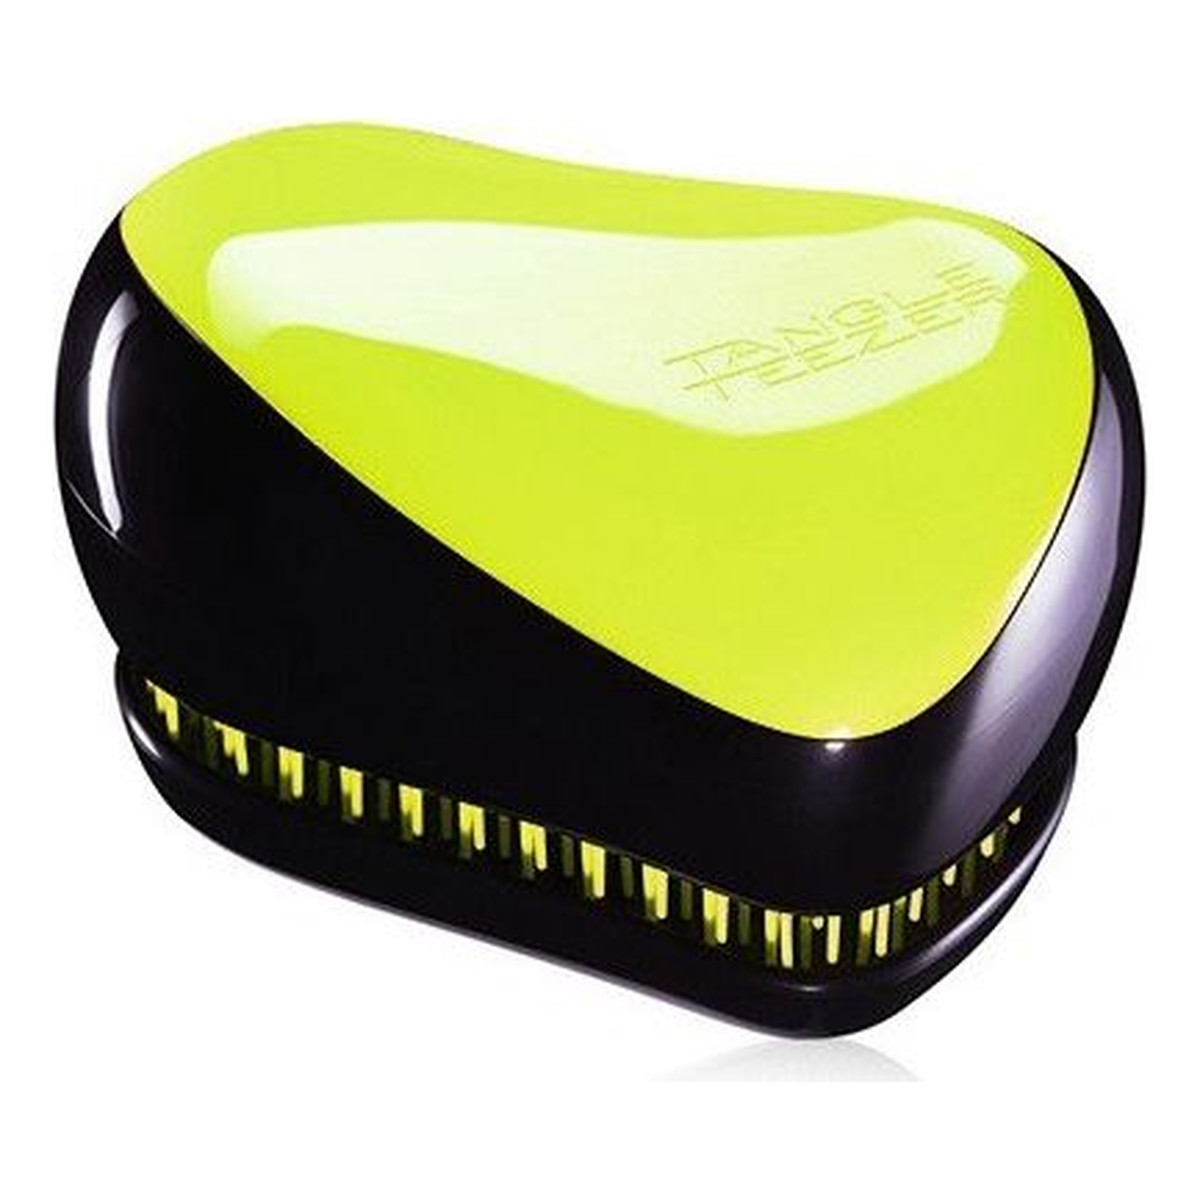 Tangle Teezer Compact Styler Hairbrush szczotka do włosów Neon Yellow